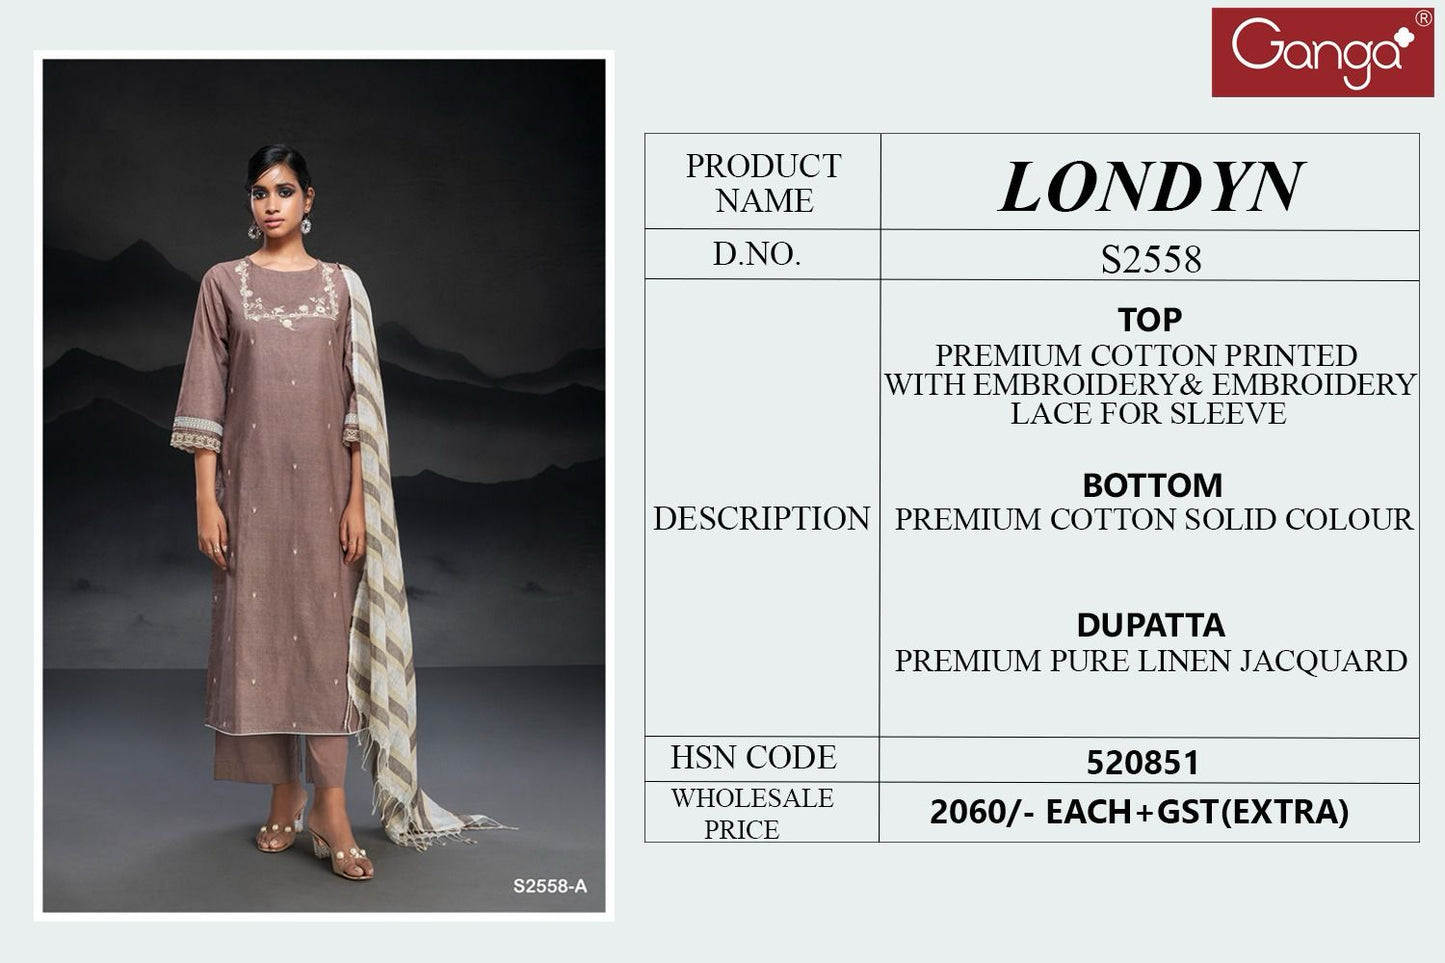 Londyn 2558 Ganga Premium Cotton Plazzo Style Suits Supplier Gujarat